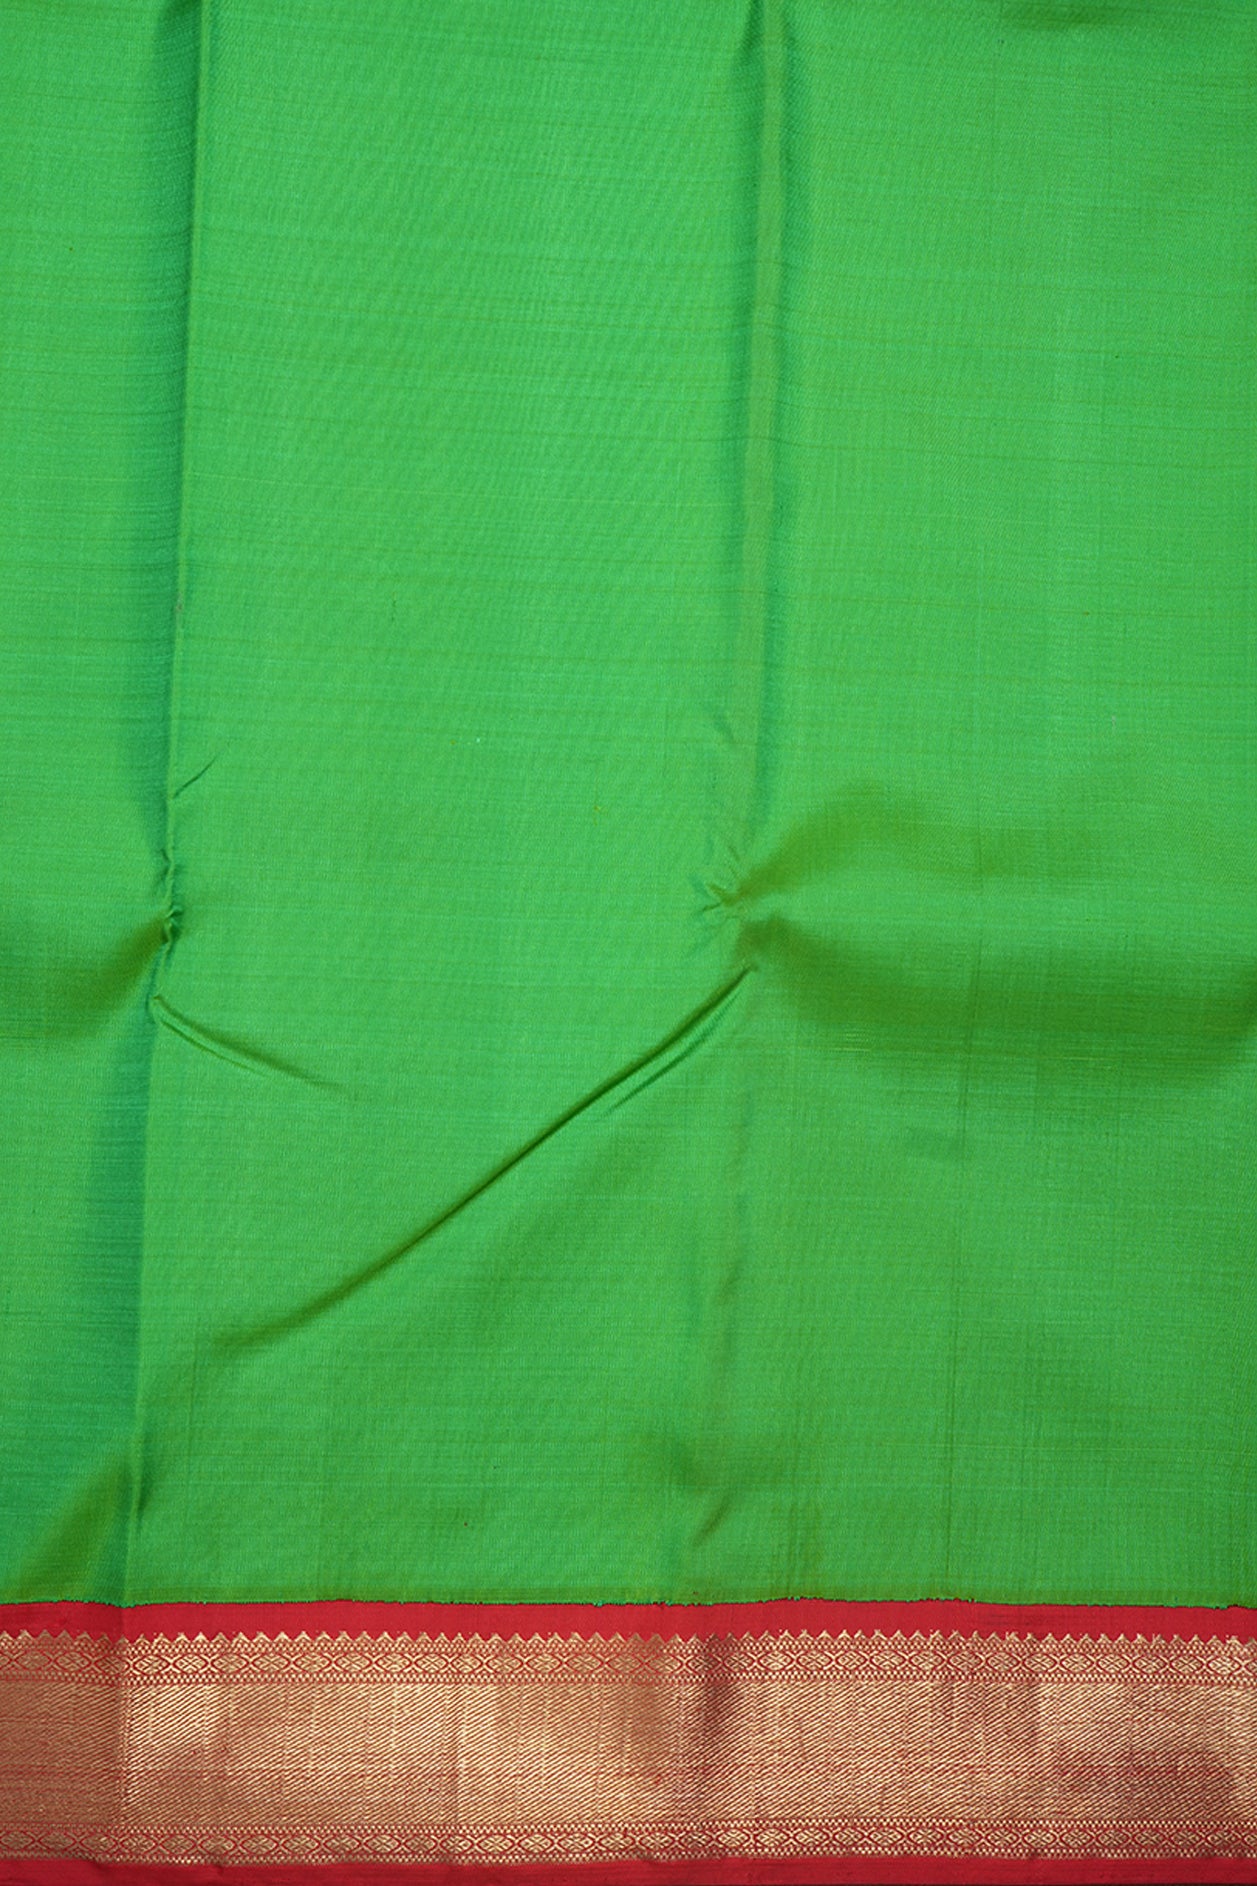 Twill Weave And Rudraksh Zari Border Plain Parrot Green Kanchipuram Silk Saree